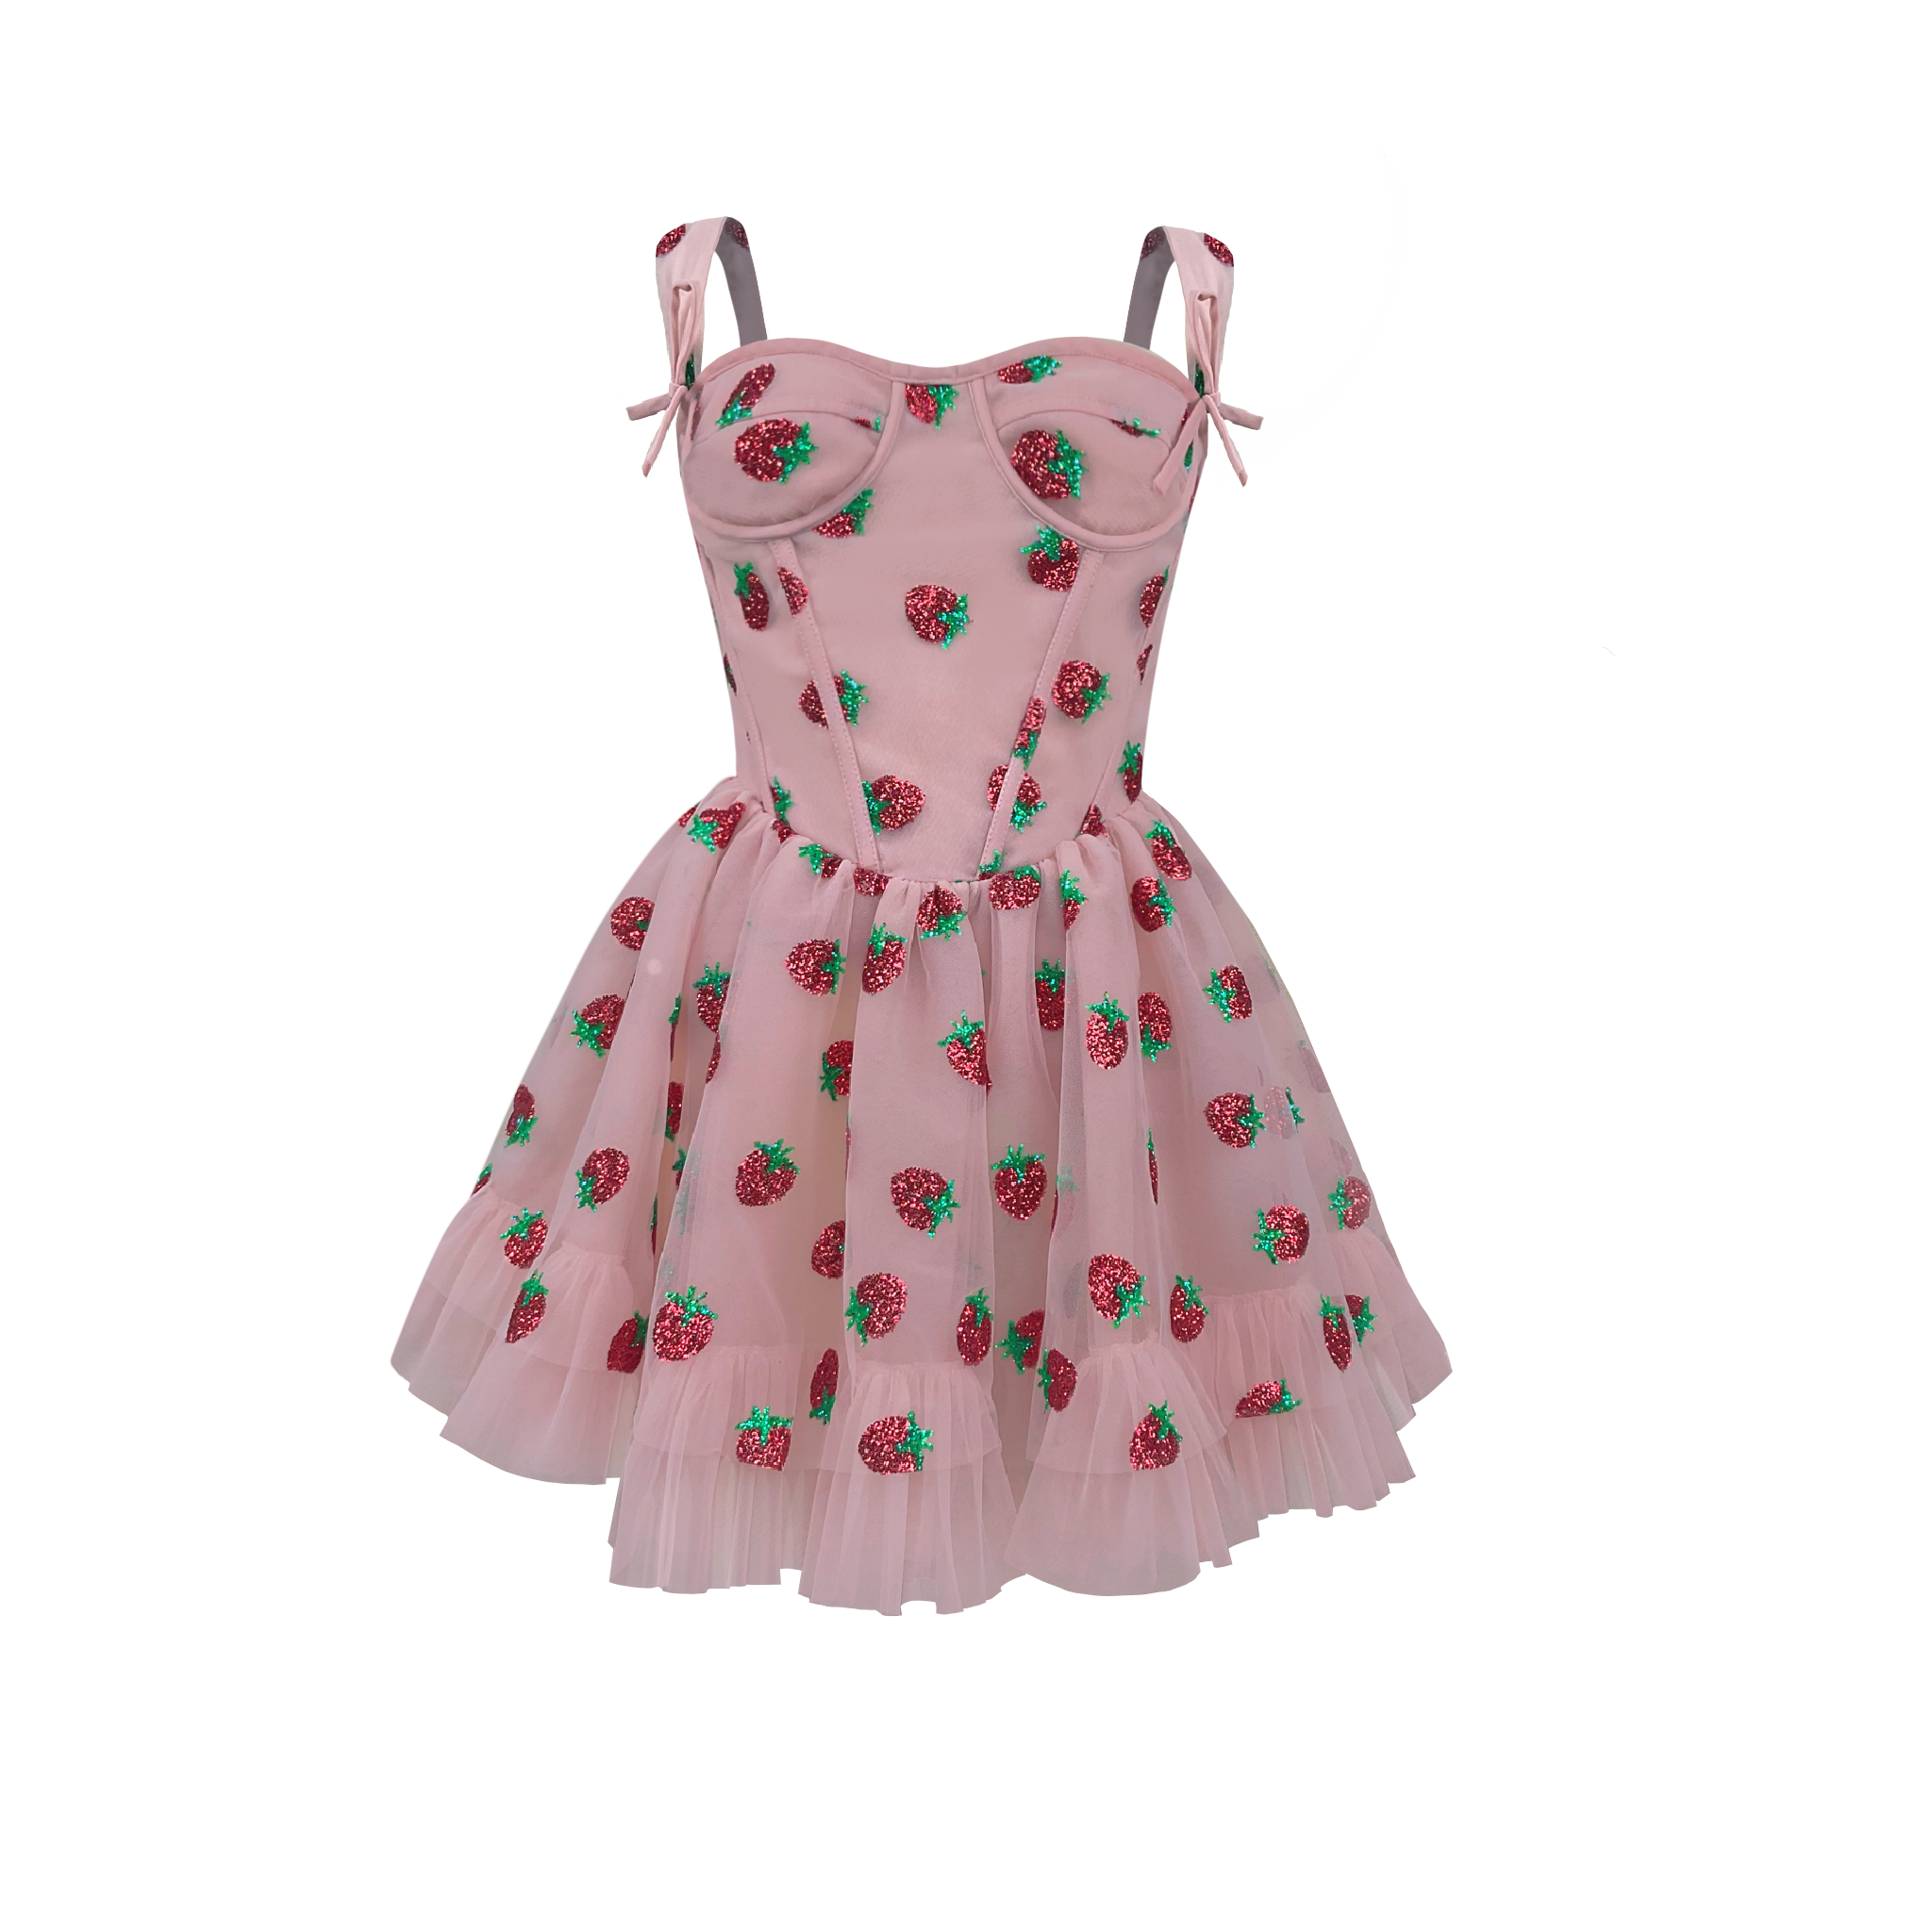 Strawberry dress